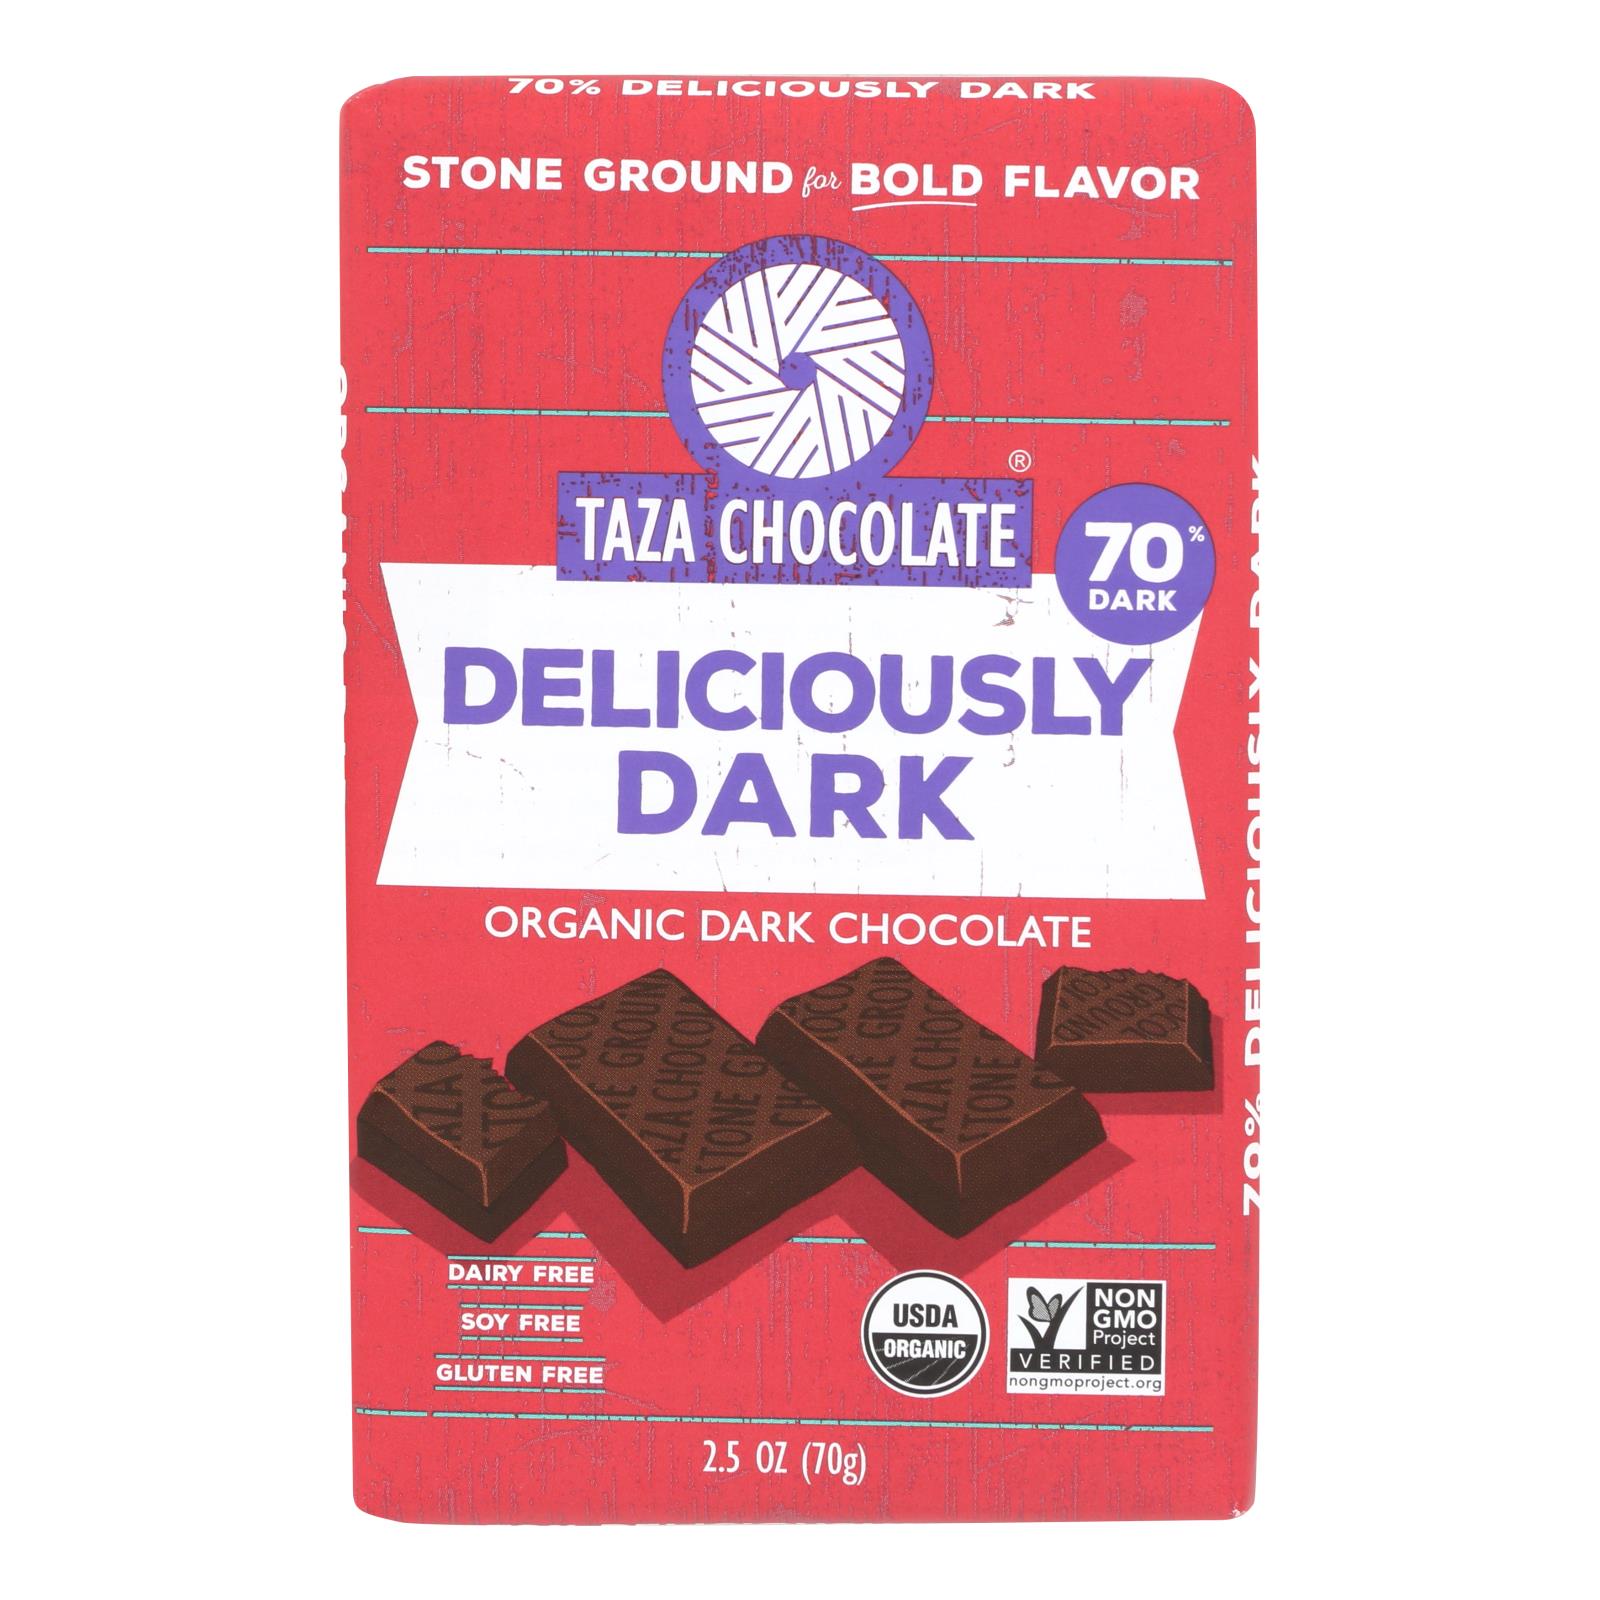 Taza Chocolate - Bar Deliciously Dark - Case of 10 - 2.5 OZ